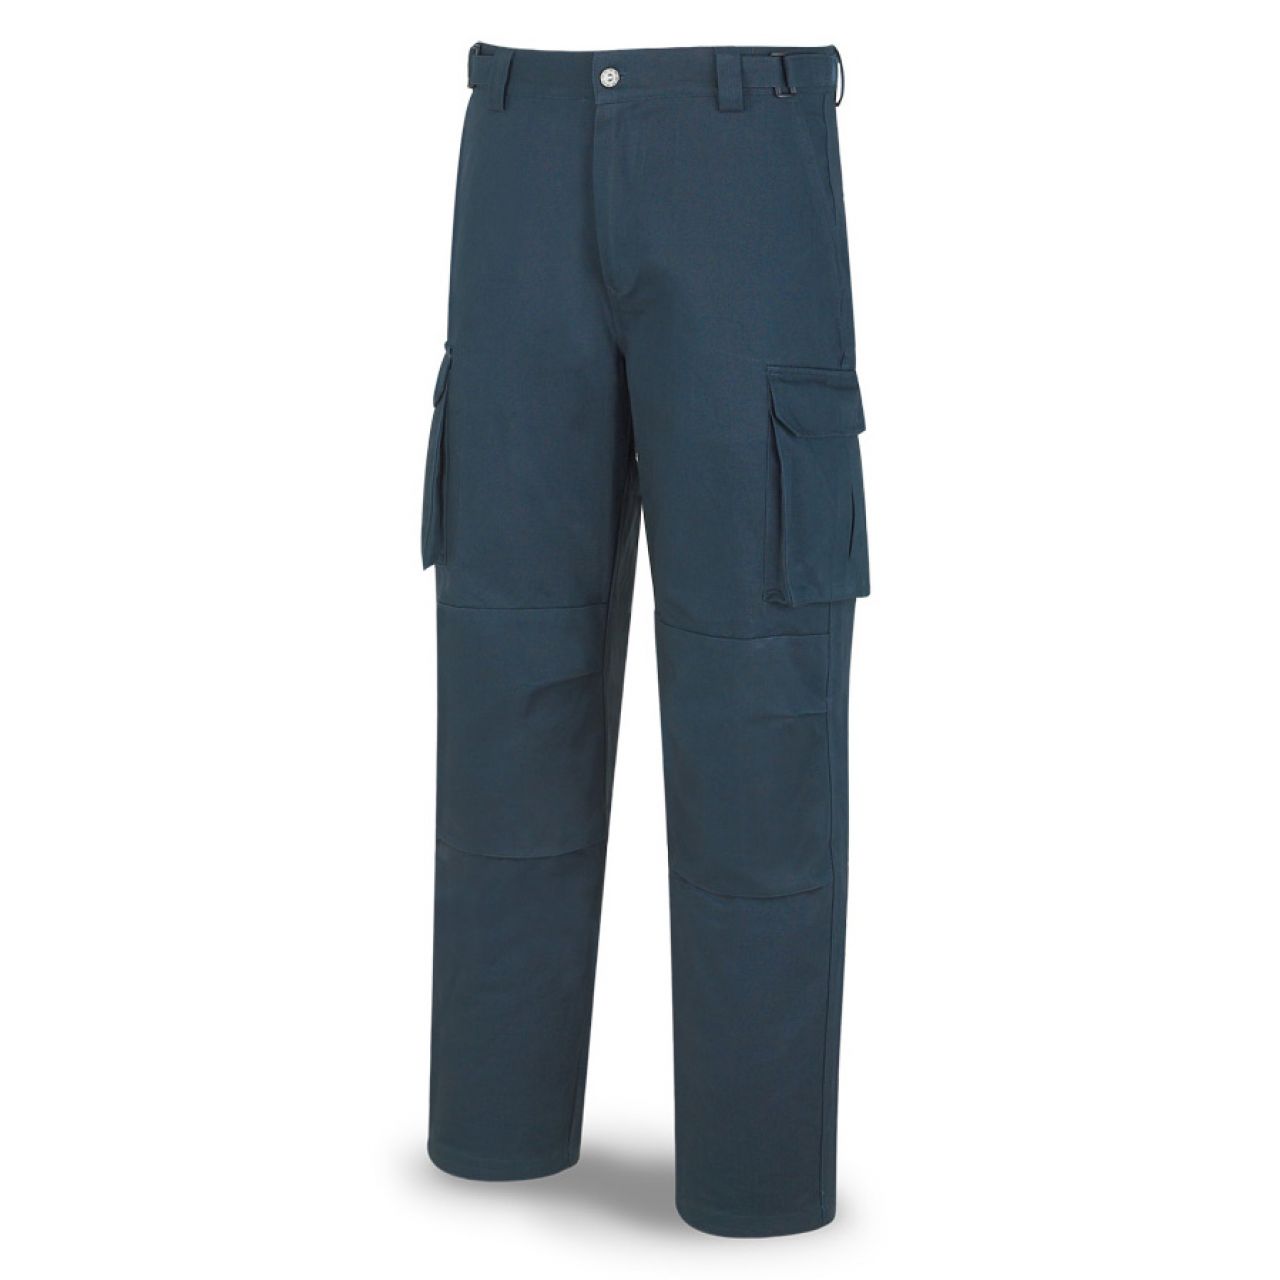 588PEWAM Pantalón ESPECIALISTA INVIERNO azul marino algodón "sanforizado" 245 gr. Multibolsillos